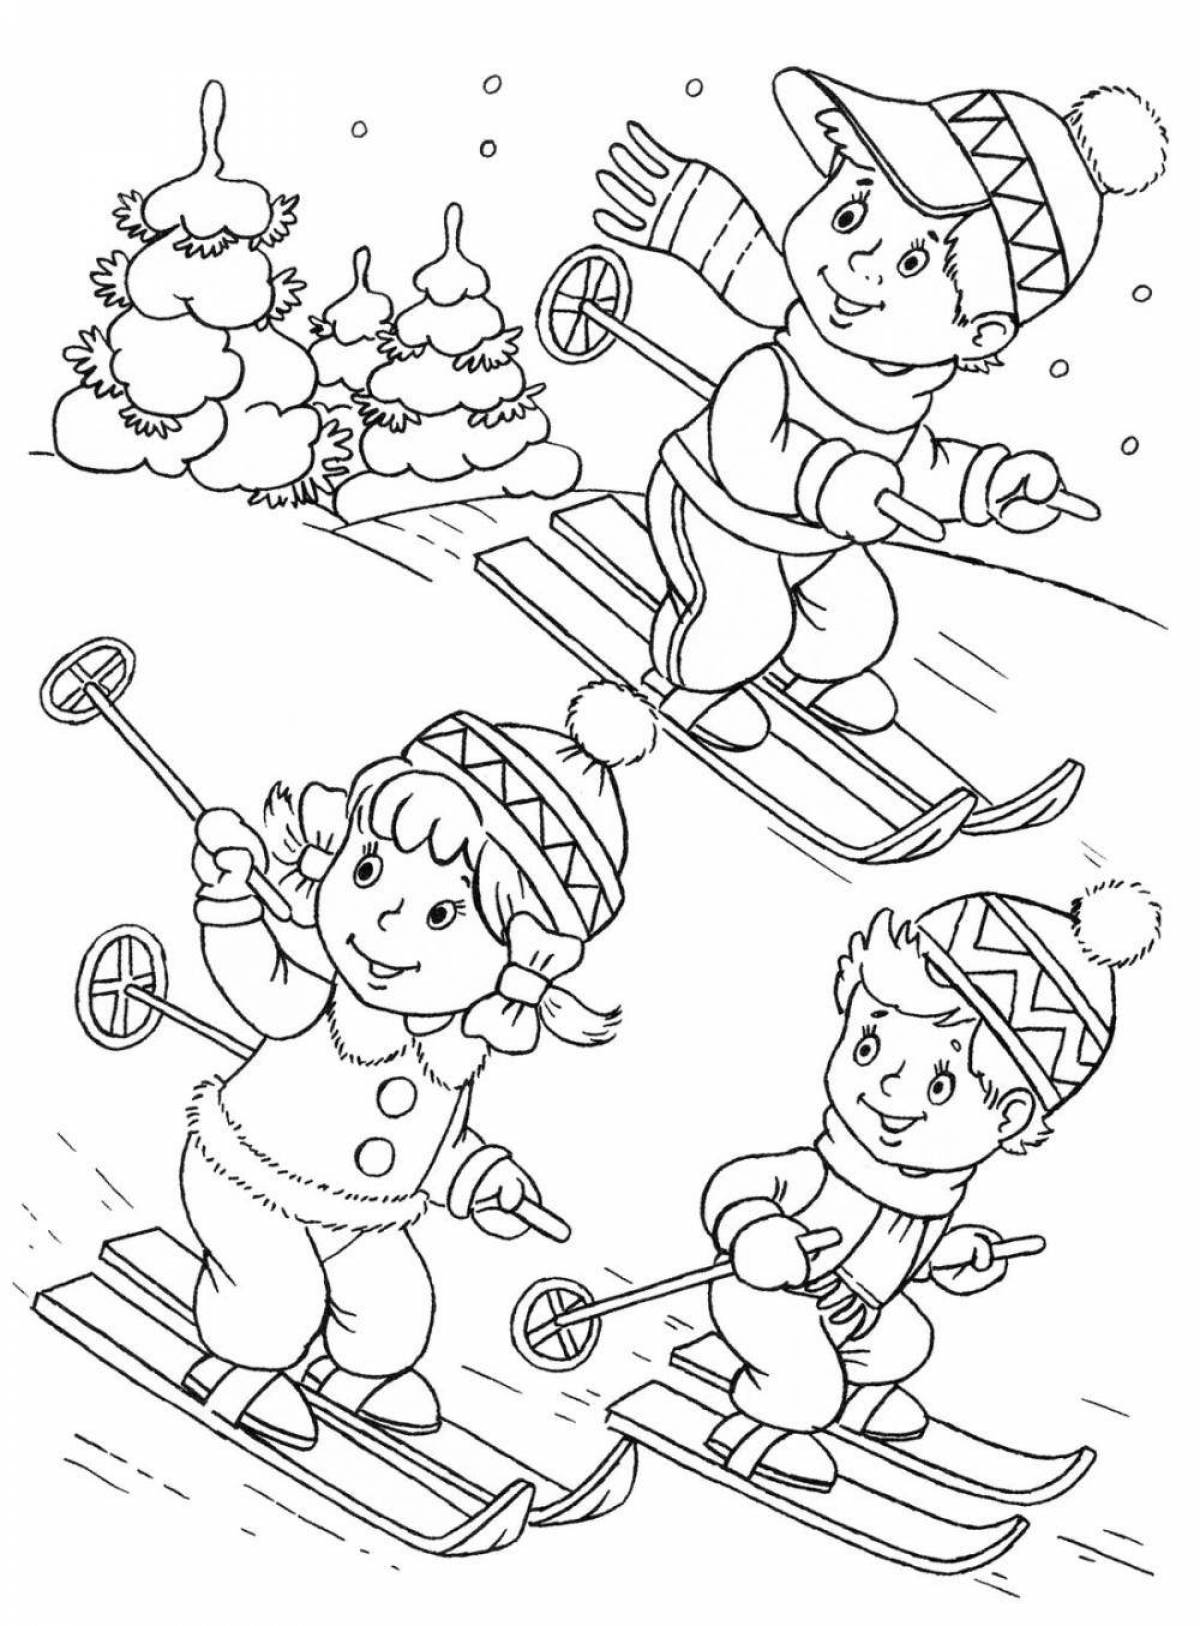 Live coloring for children winter fun